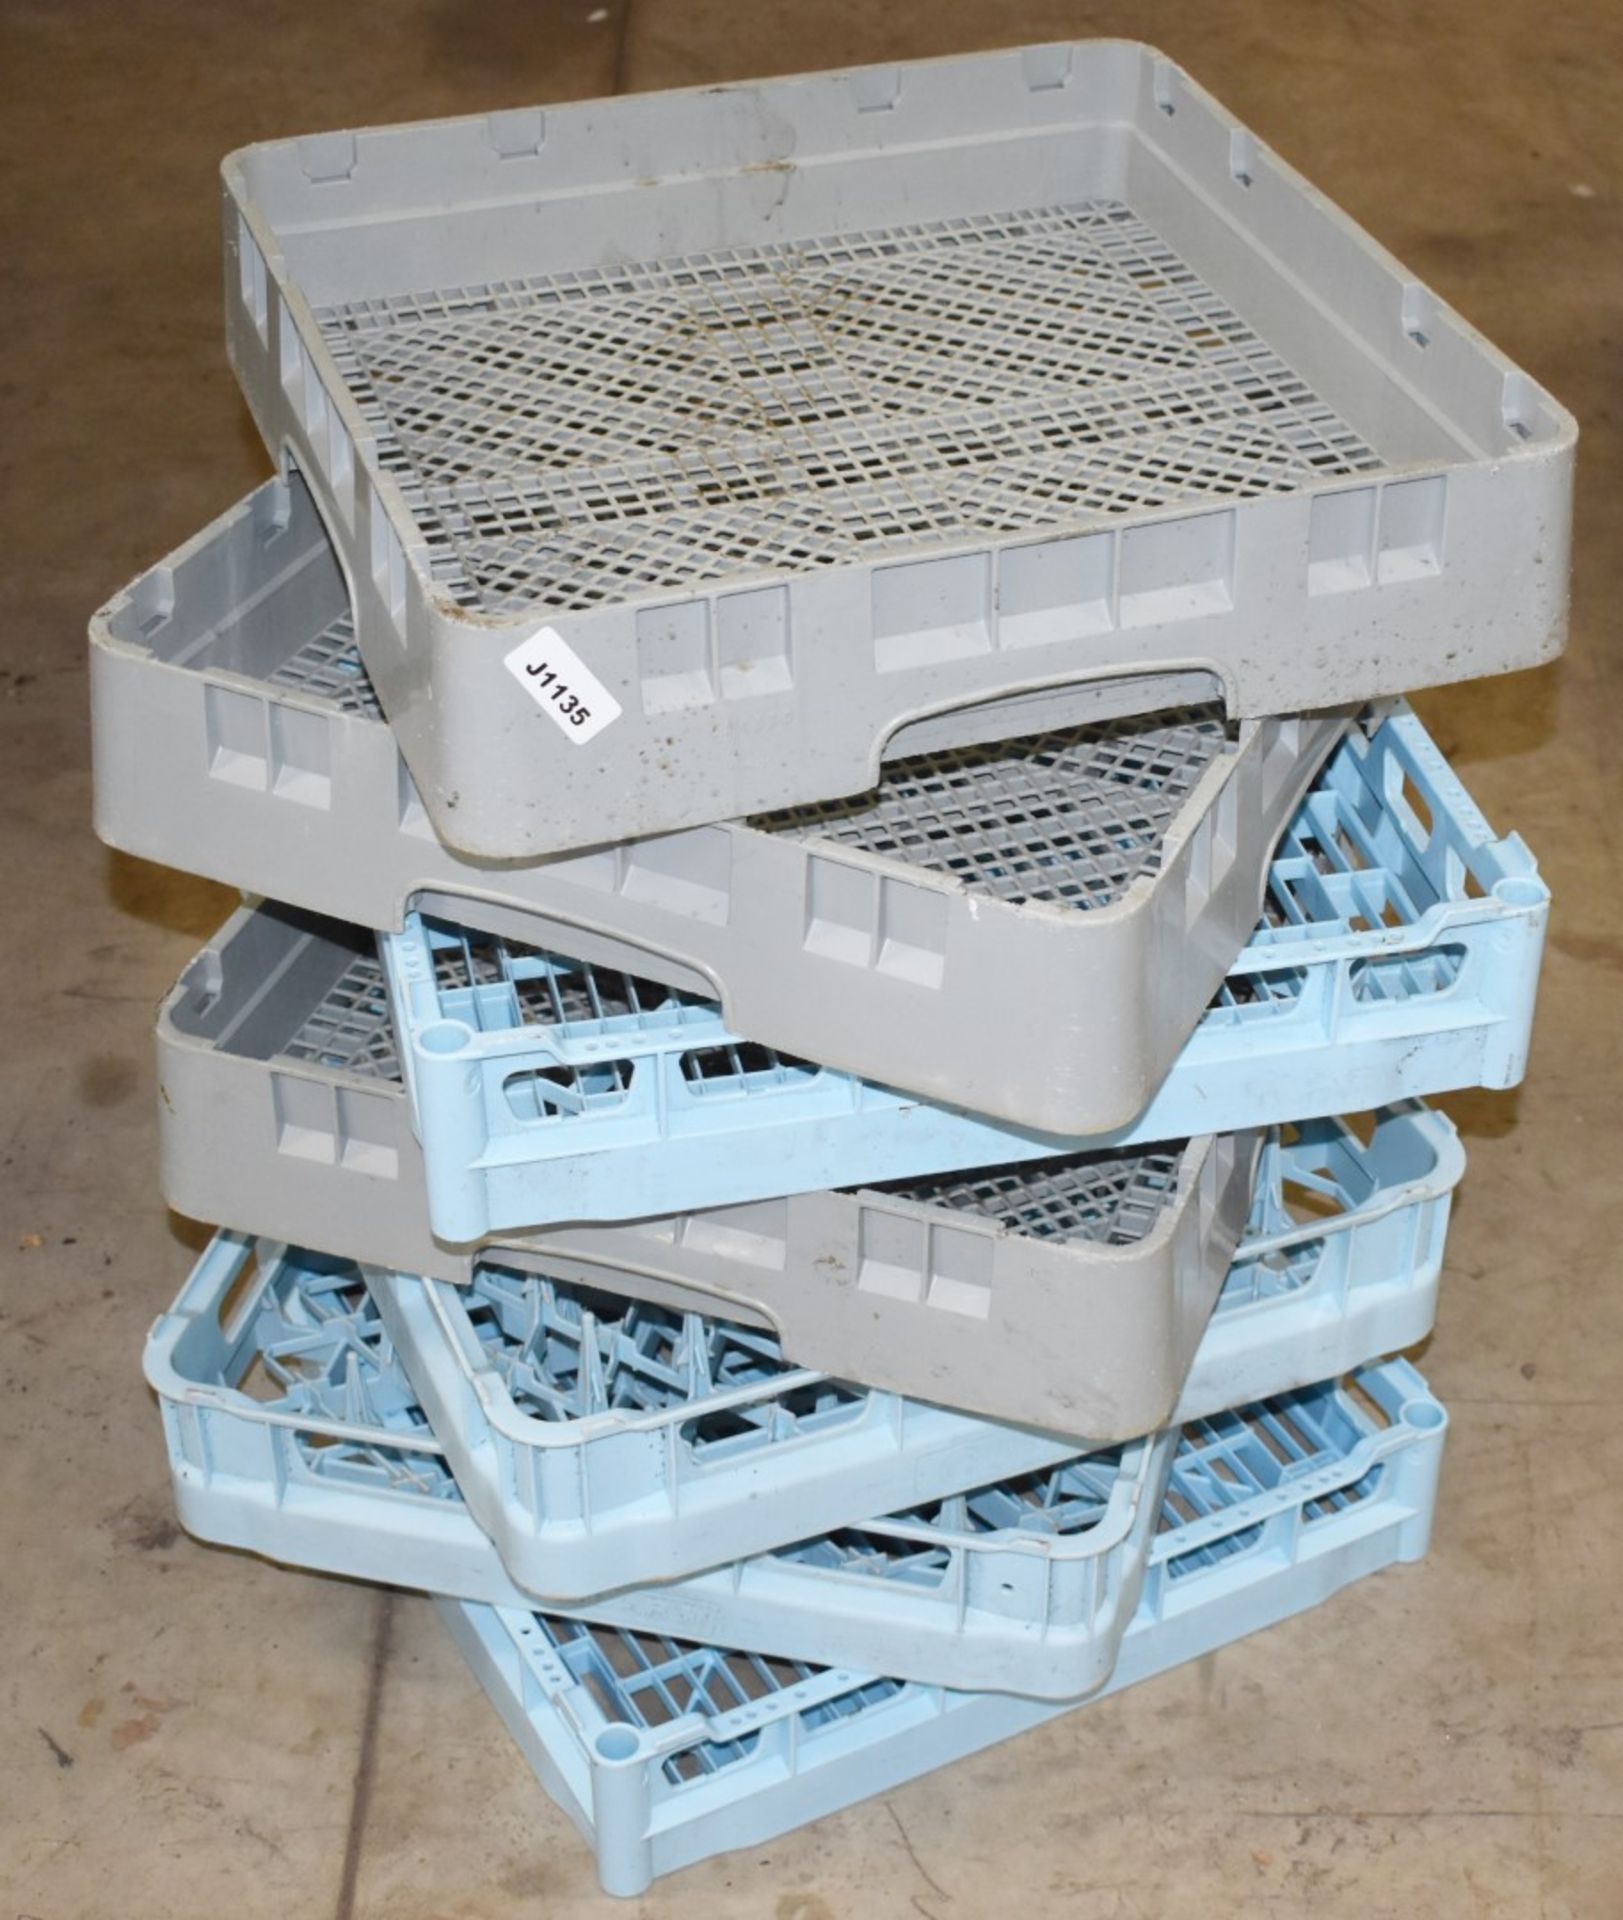 7 x Commercial Dishwasher Trays - Ref J1135 - CL390 - Location: Altrincham WA14